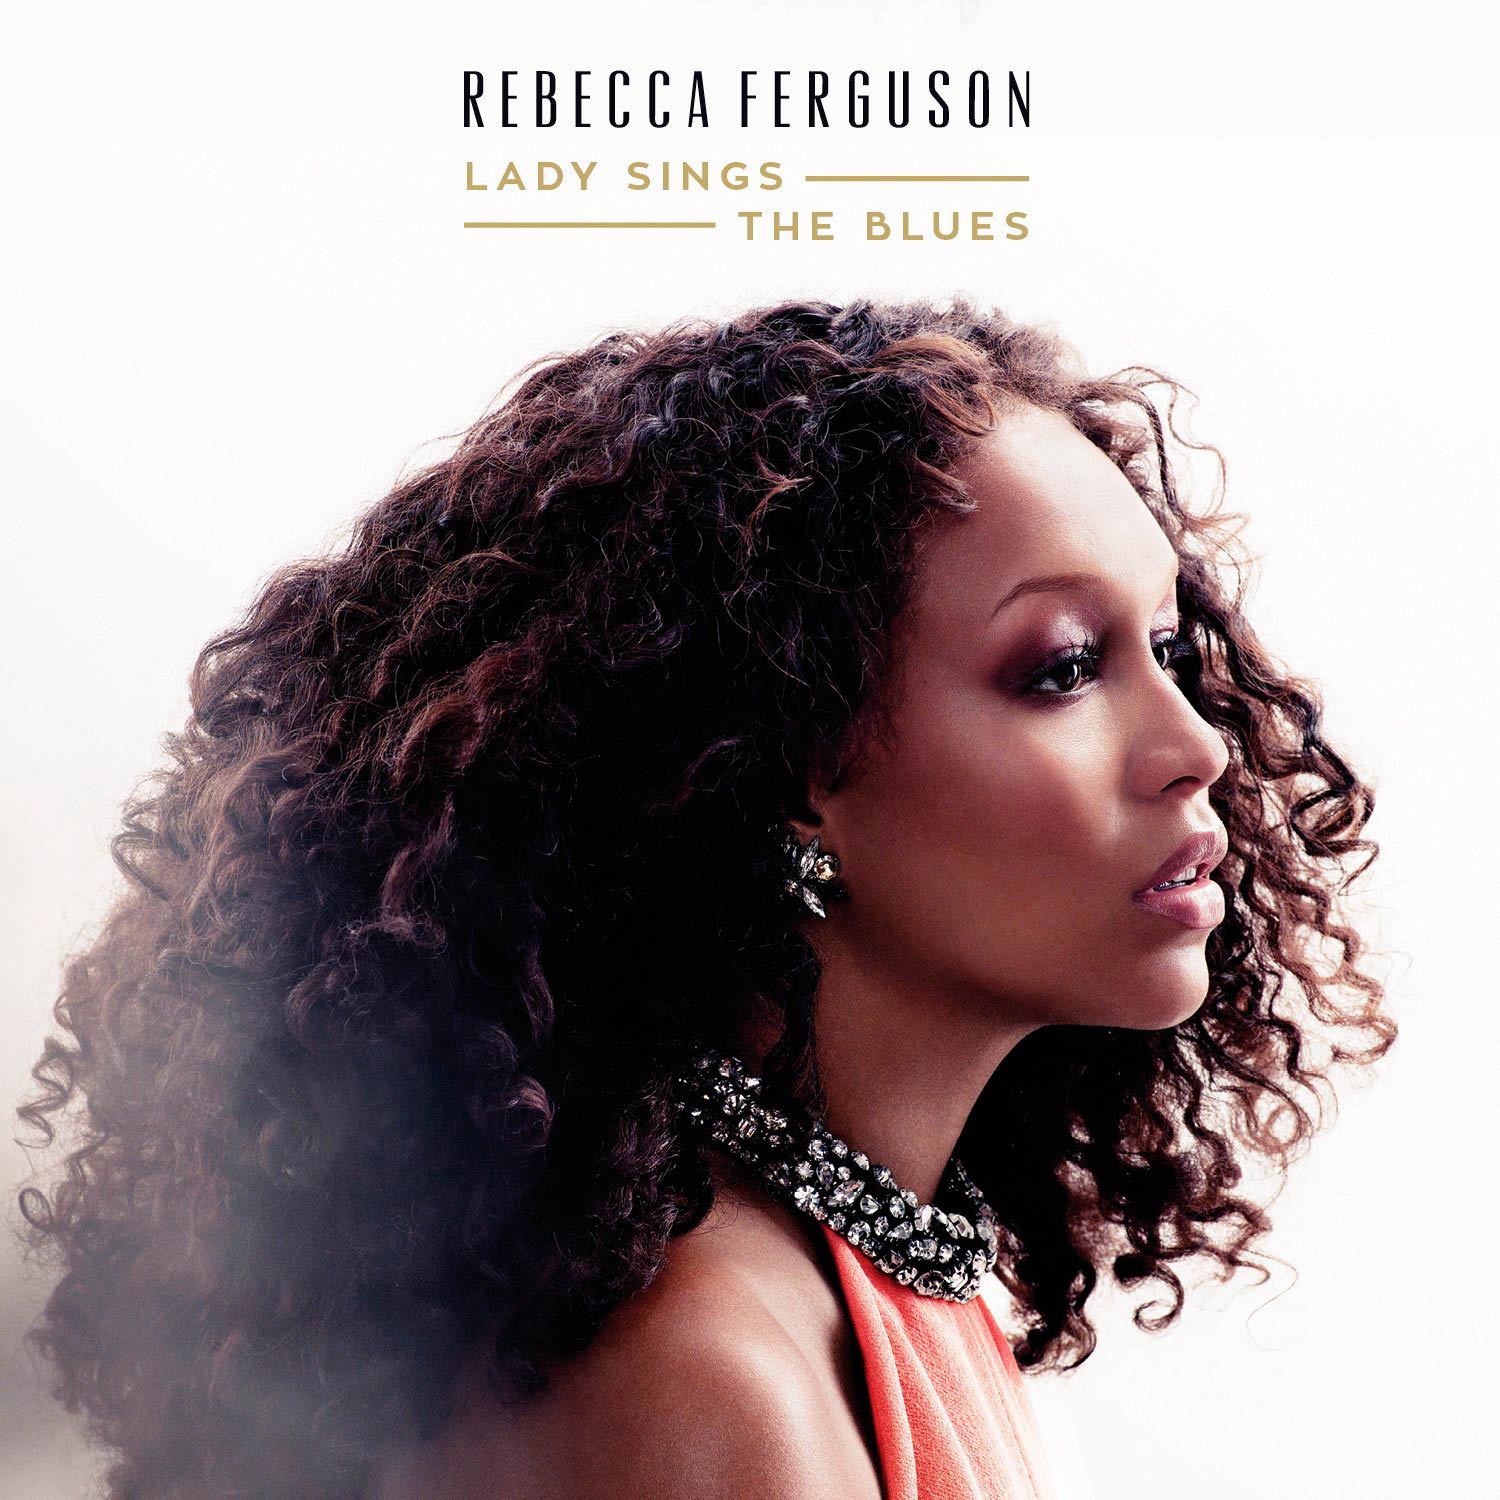 Rebecca Ferguson: Lady sings the blues, la portada del disco